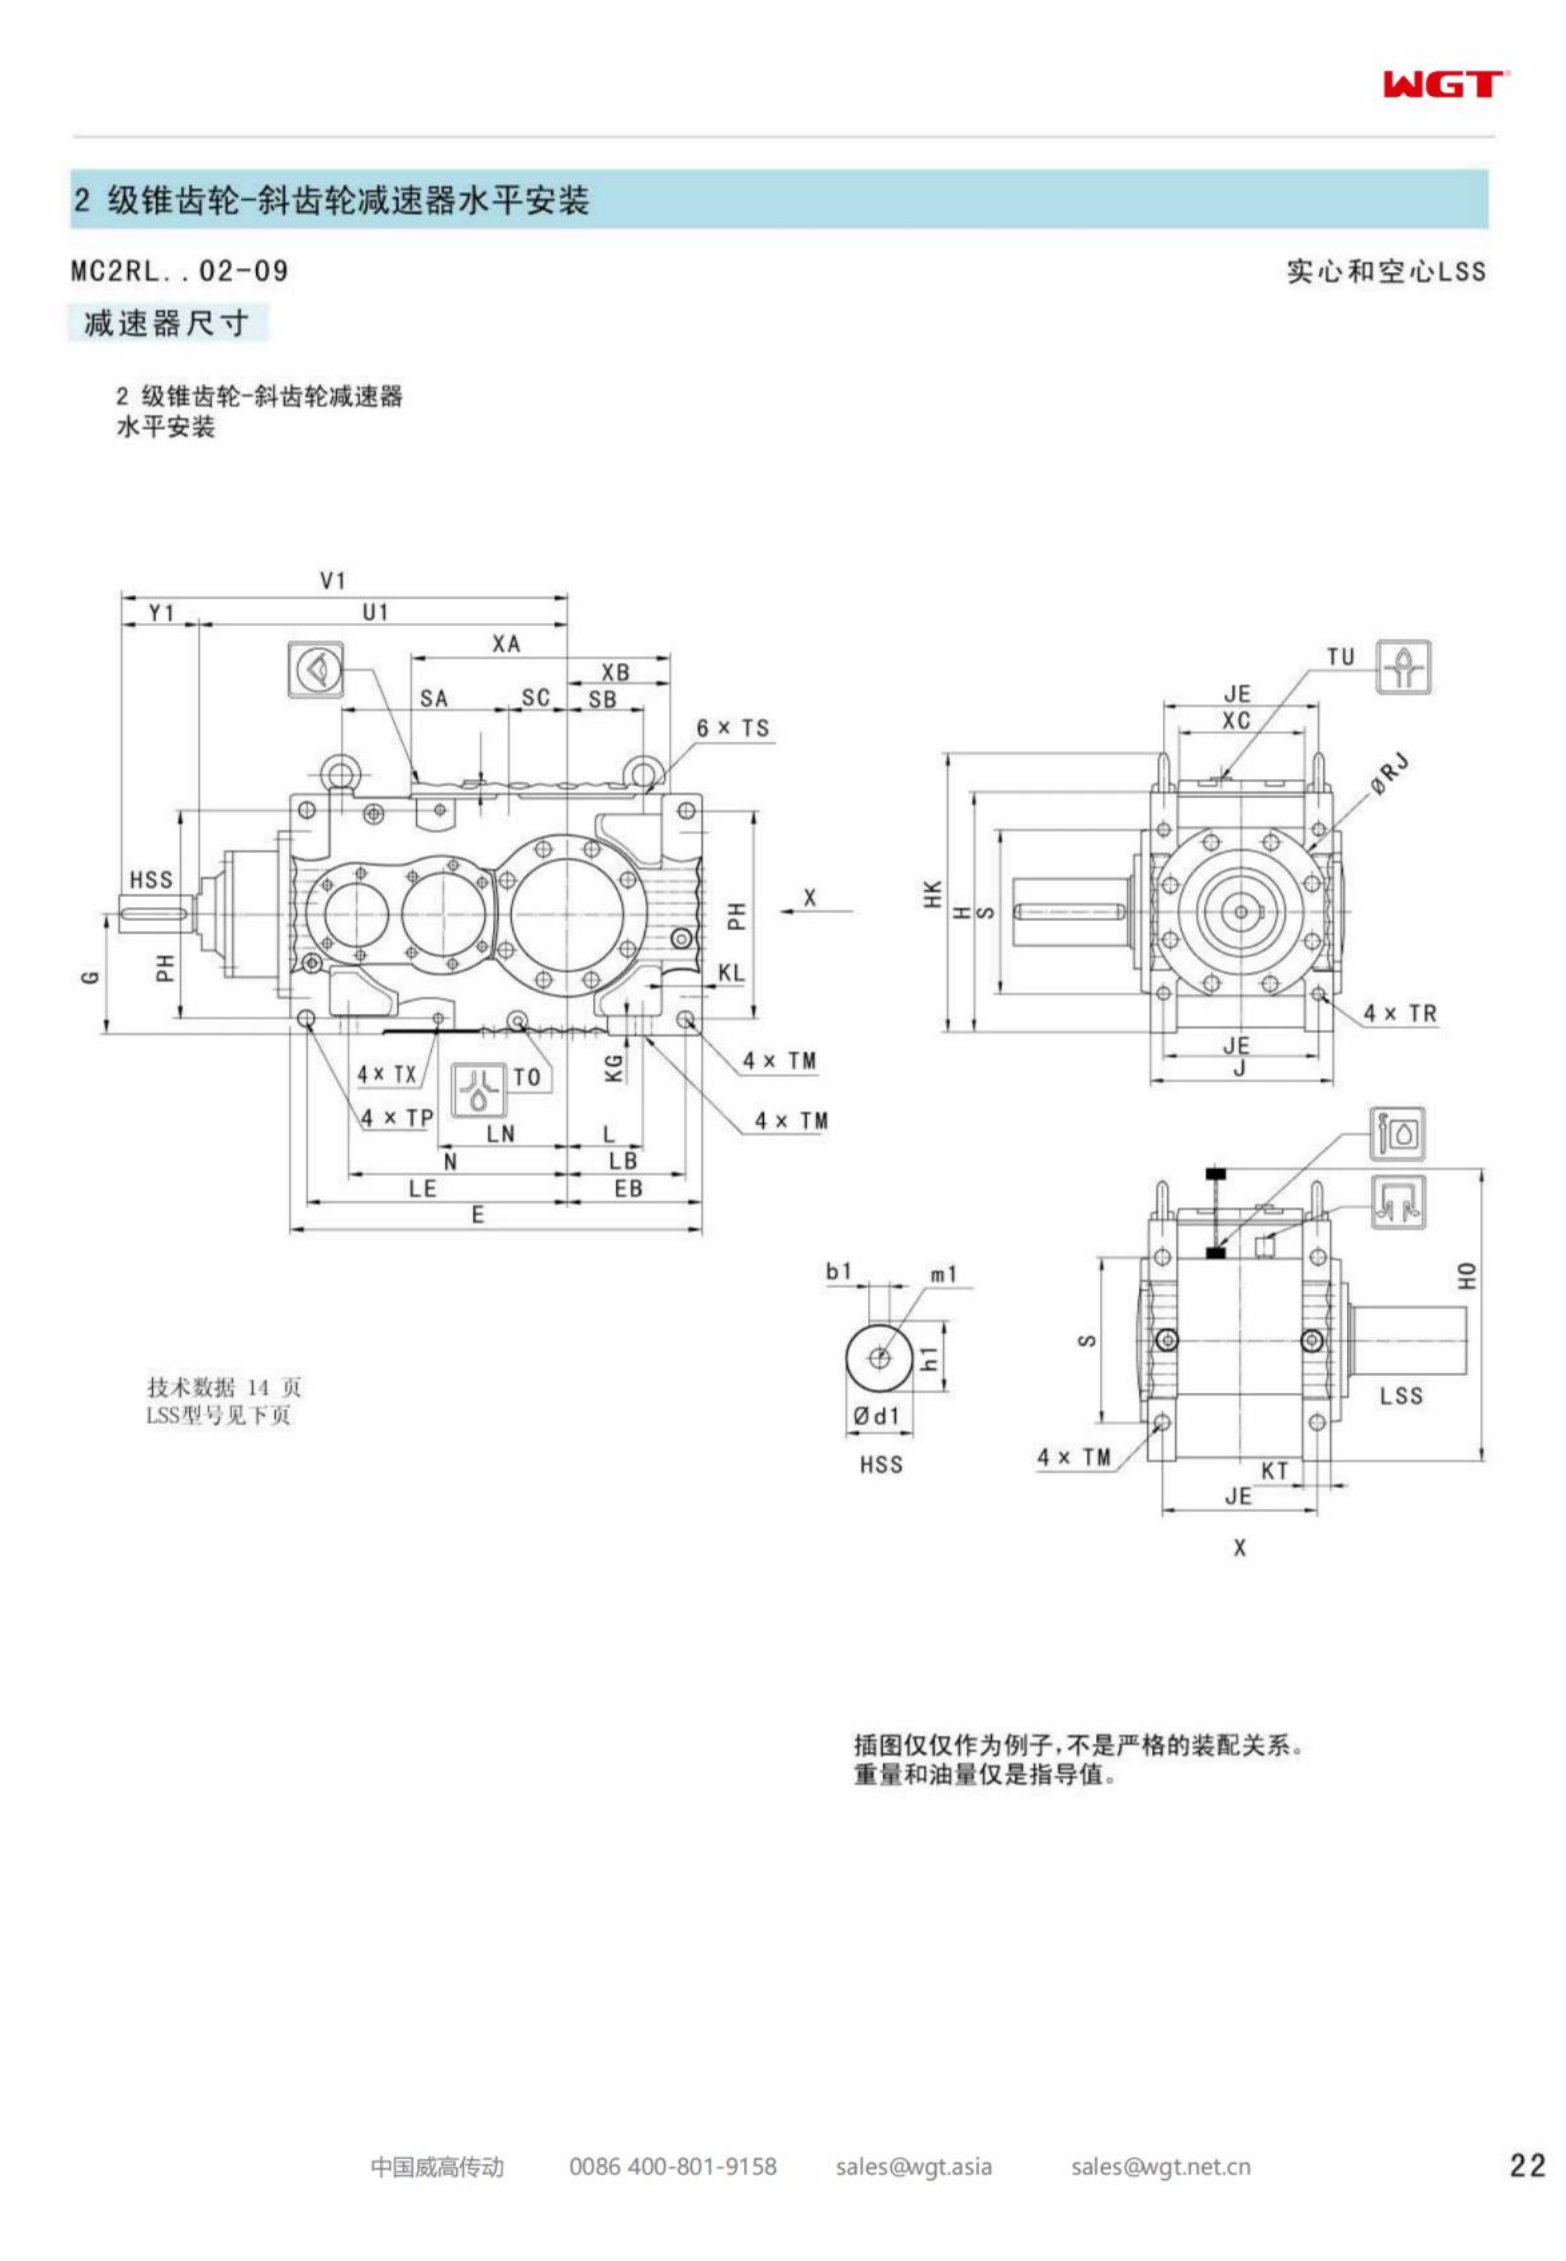 MC2RLST02 replaces _SEW_MC_Series gearbox (patent)